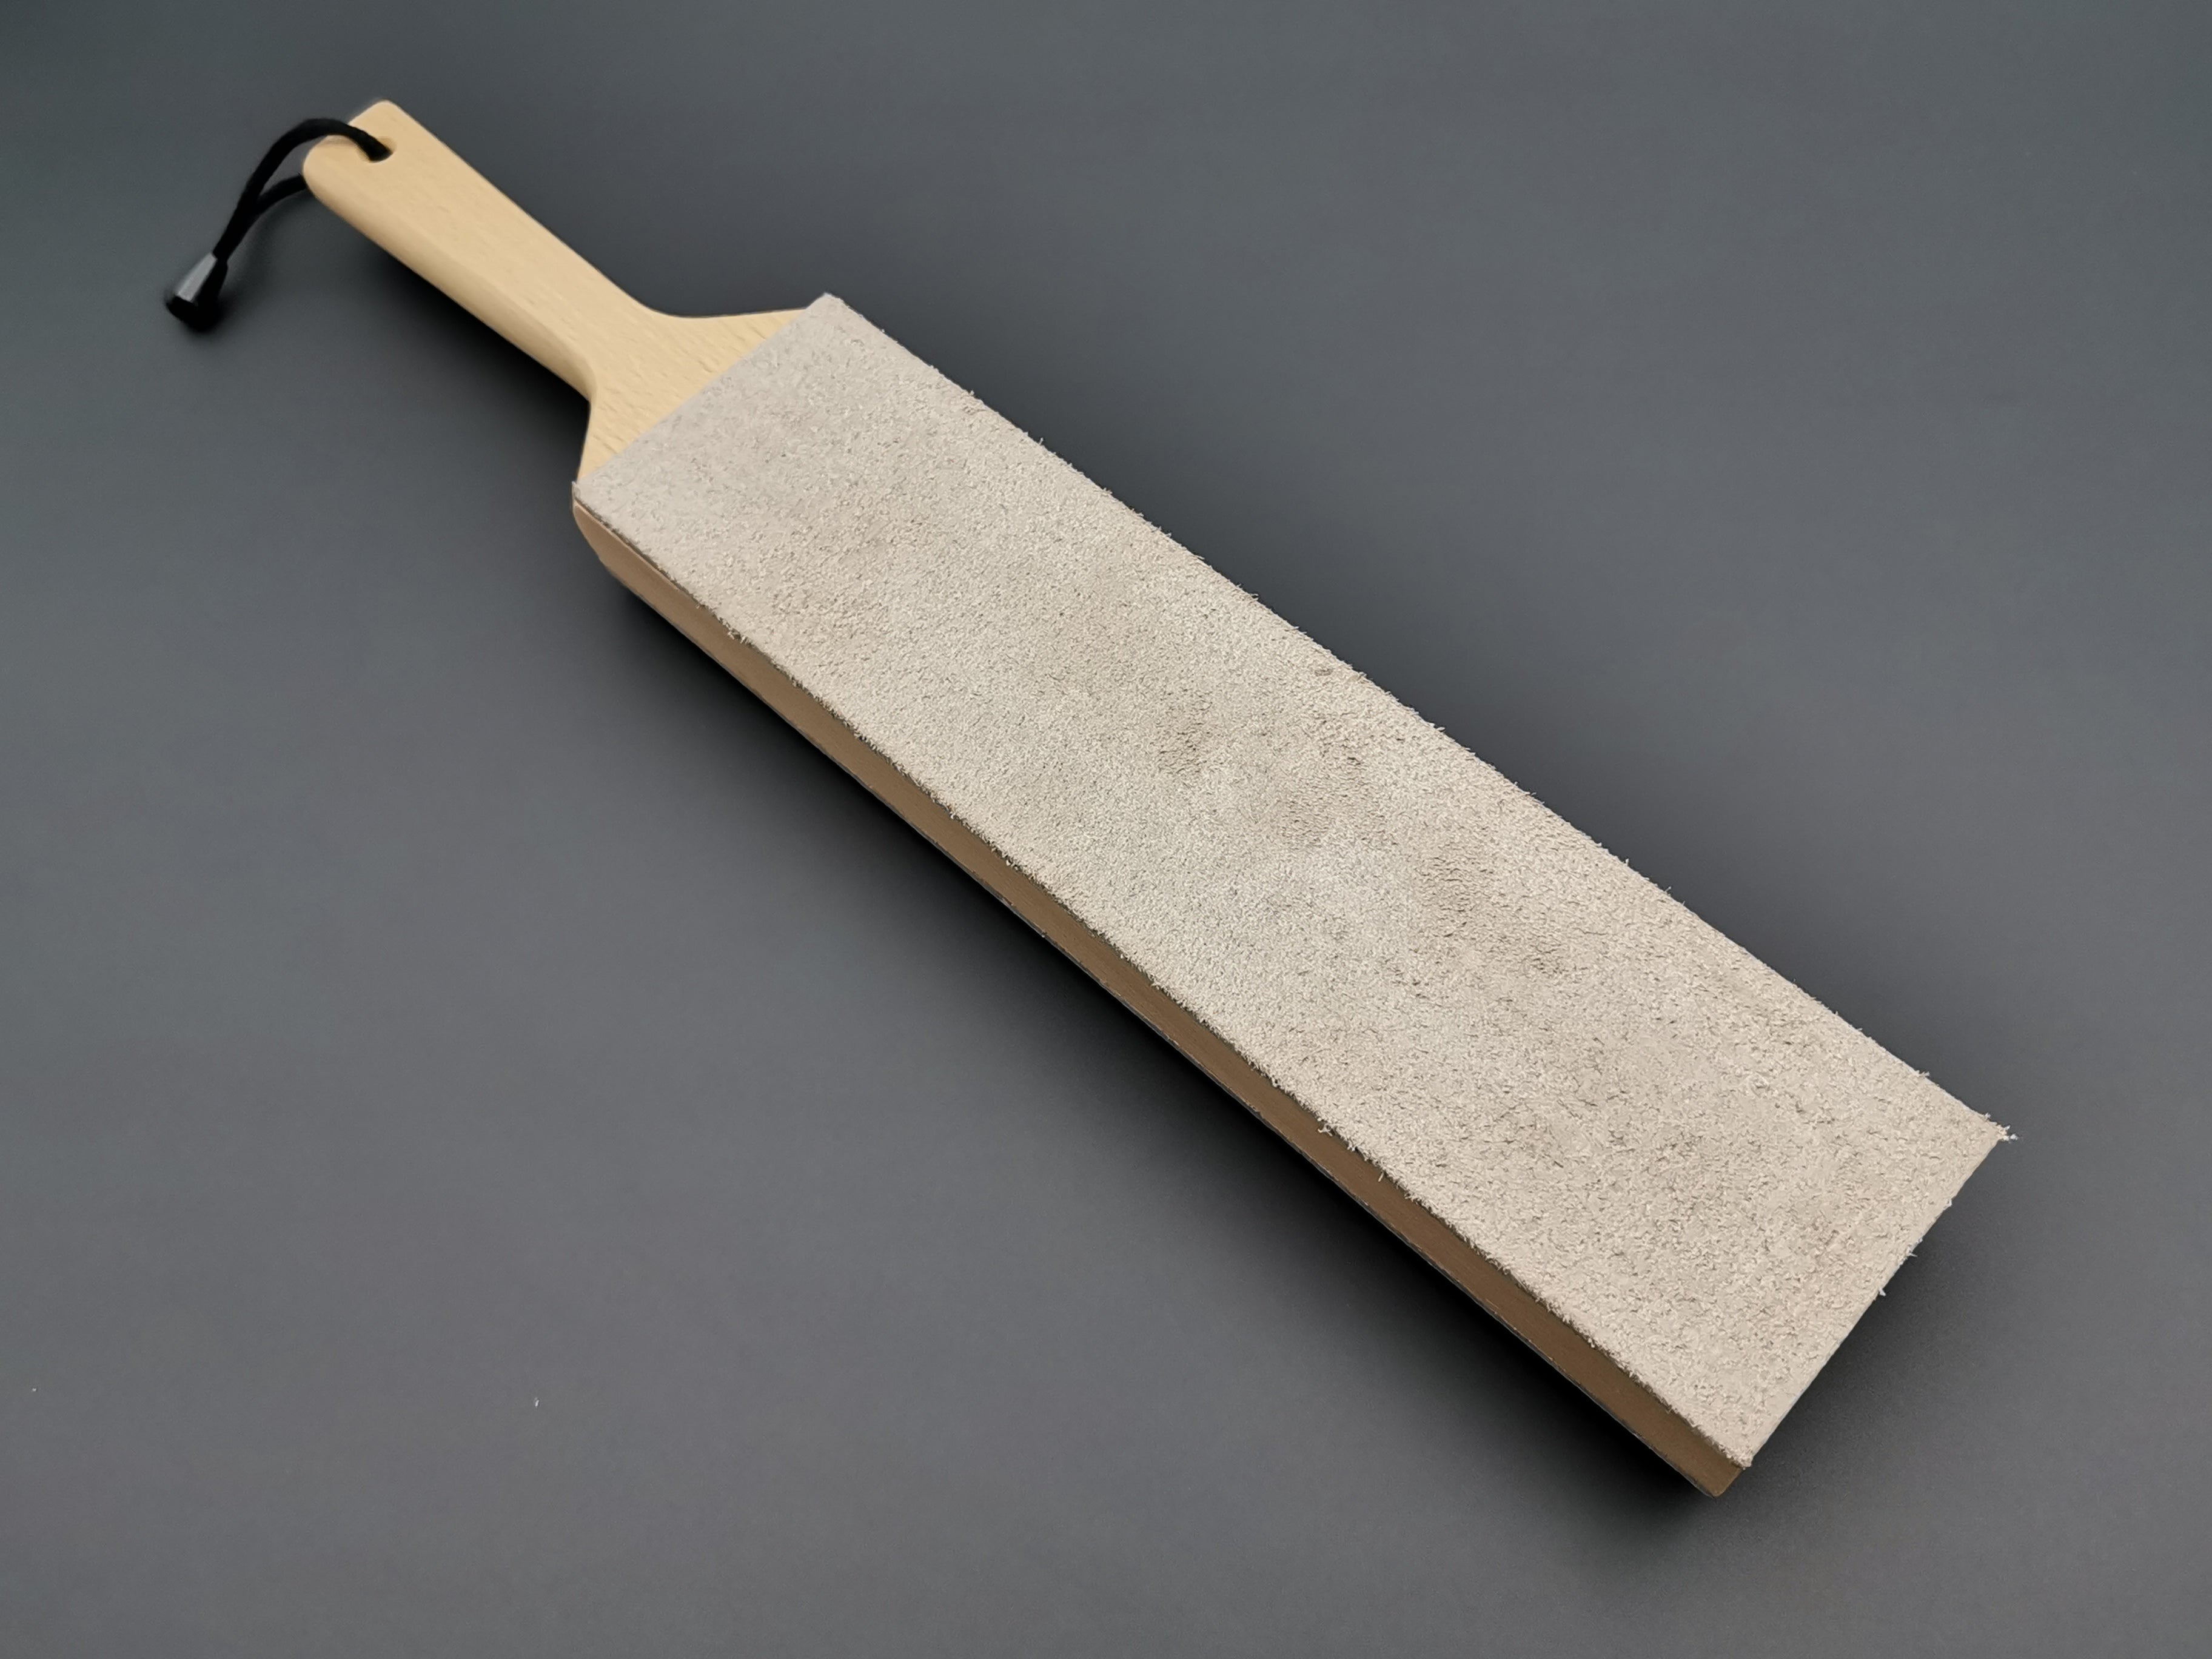 Buy Leather Strop Large for knife sharpening - UK's Best Online Price